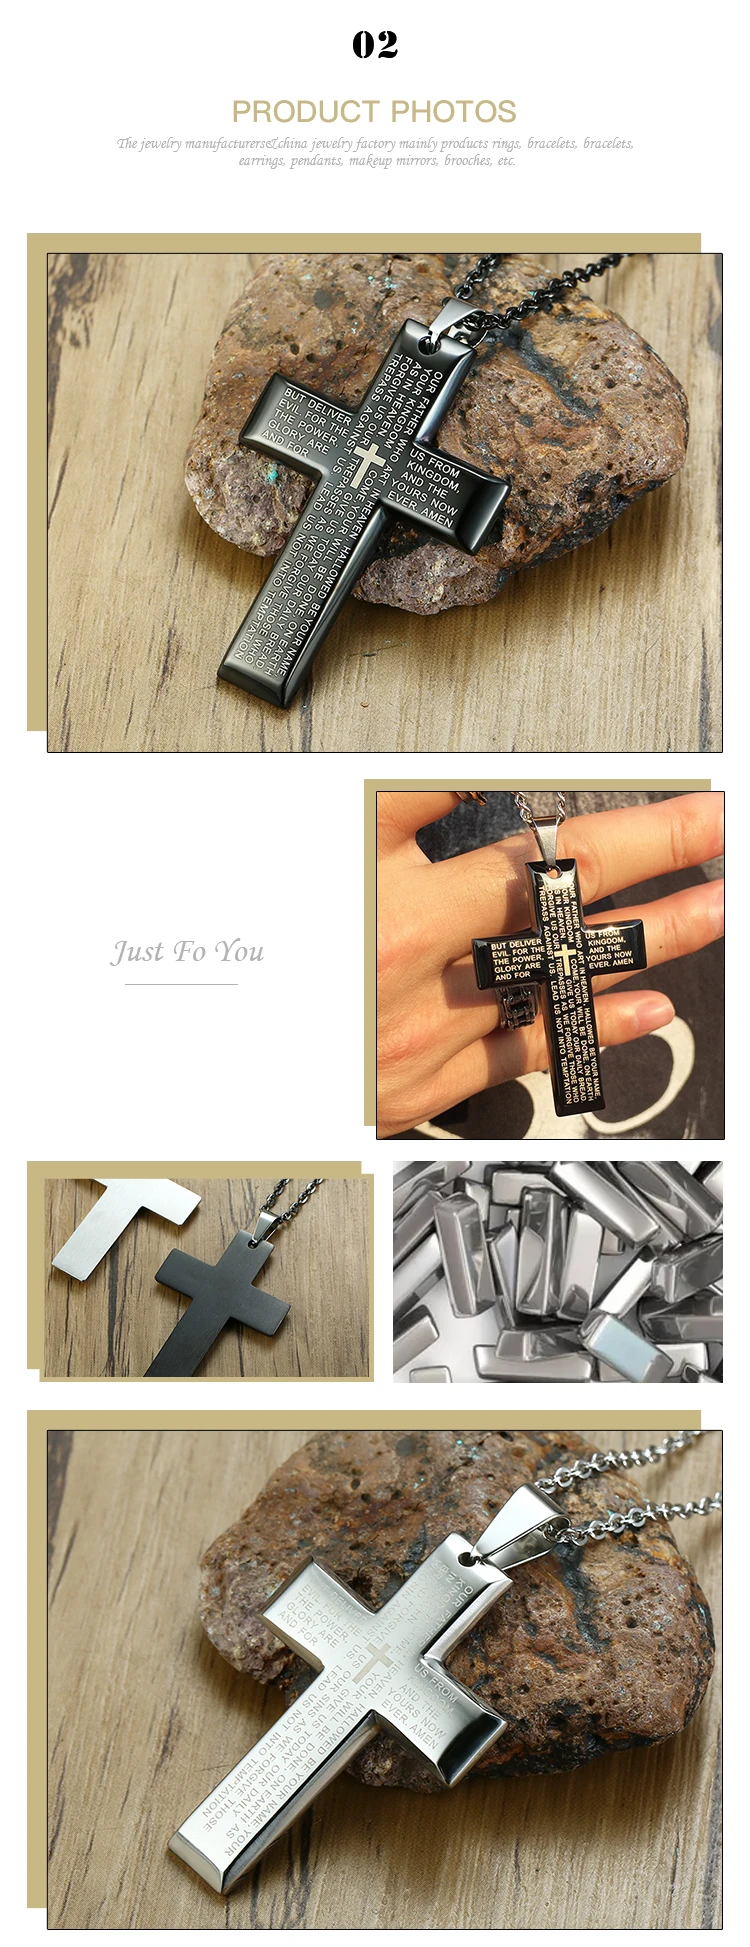 Wholesale Stainless Steel English Prayer Cross Pendant Men's Necklace PN-1151